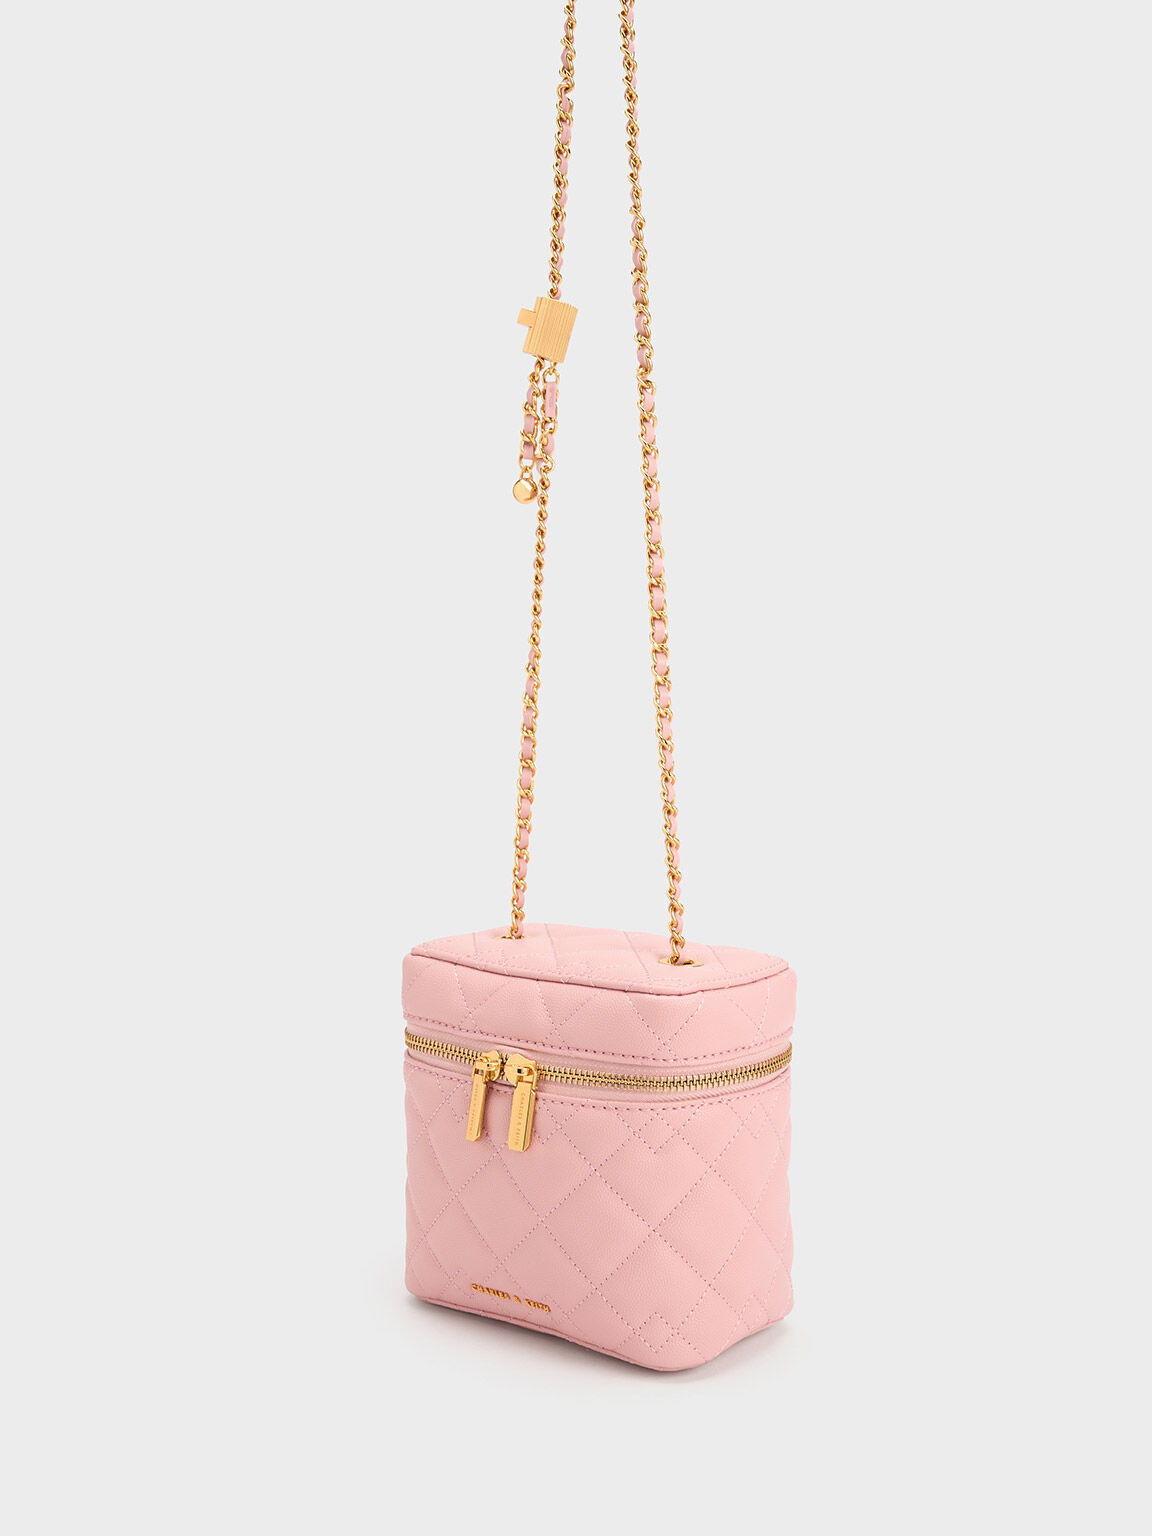 Nezu Quilted Boxy Bag, Light Pink, hi-res